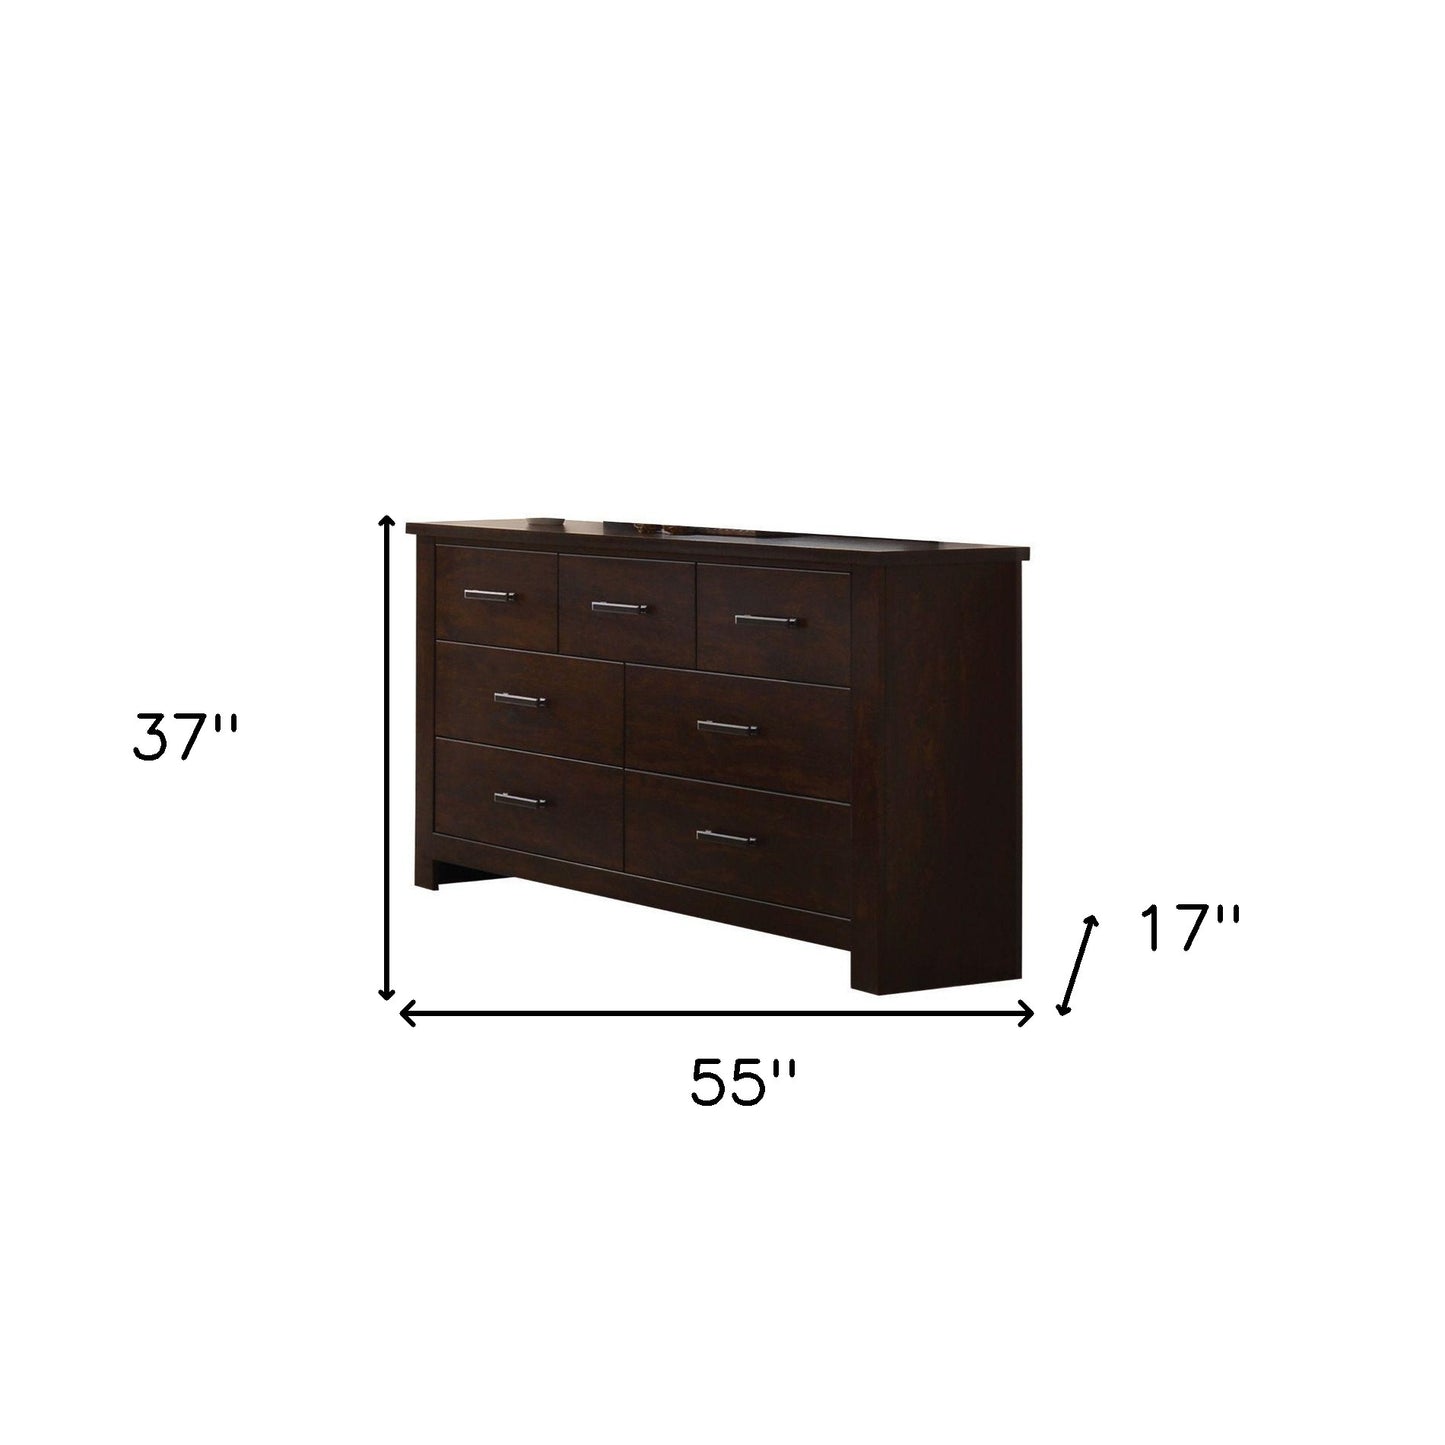 55" Mahogany Seven Drawer Double Dresser